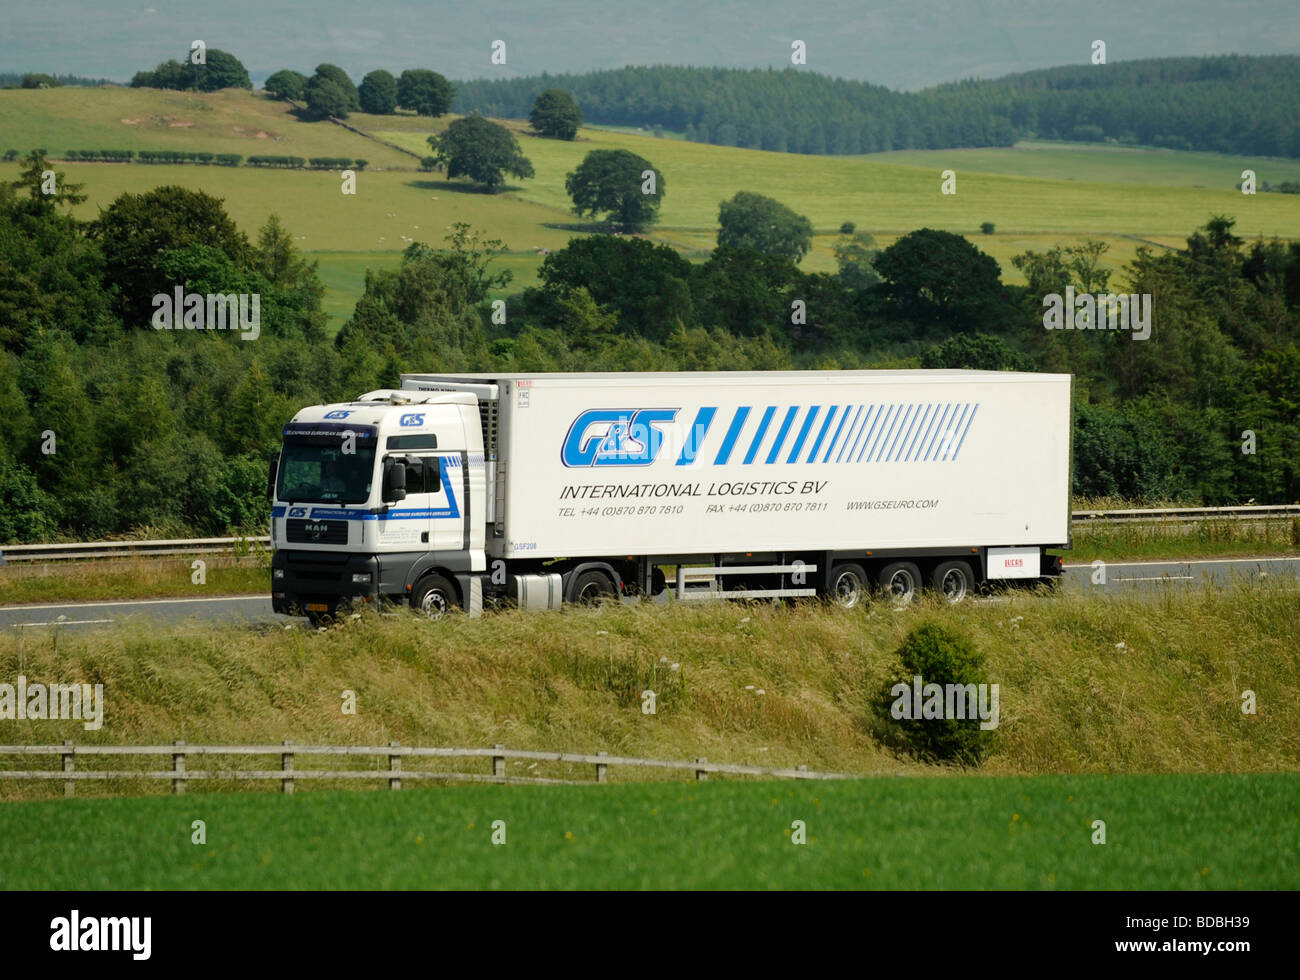 MAN TGA XXL with refrigerated trailer GS International Logistics BV Stock Photo